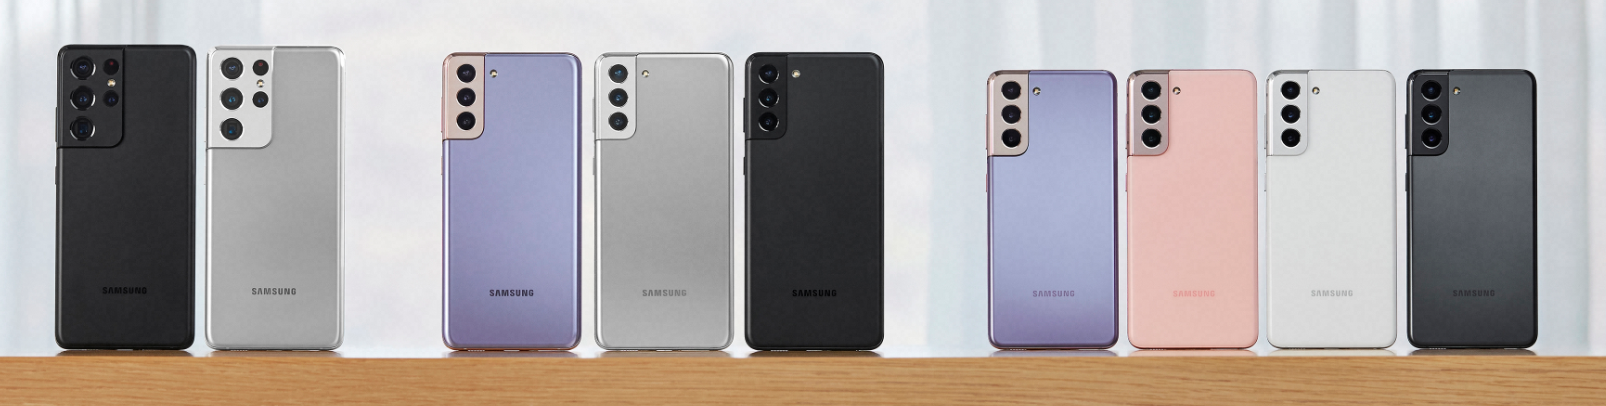 Samsung Galaxy S21, S21+ y S21 Ultra